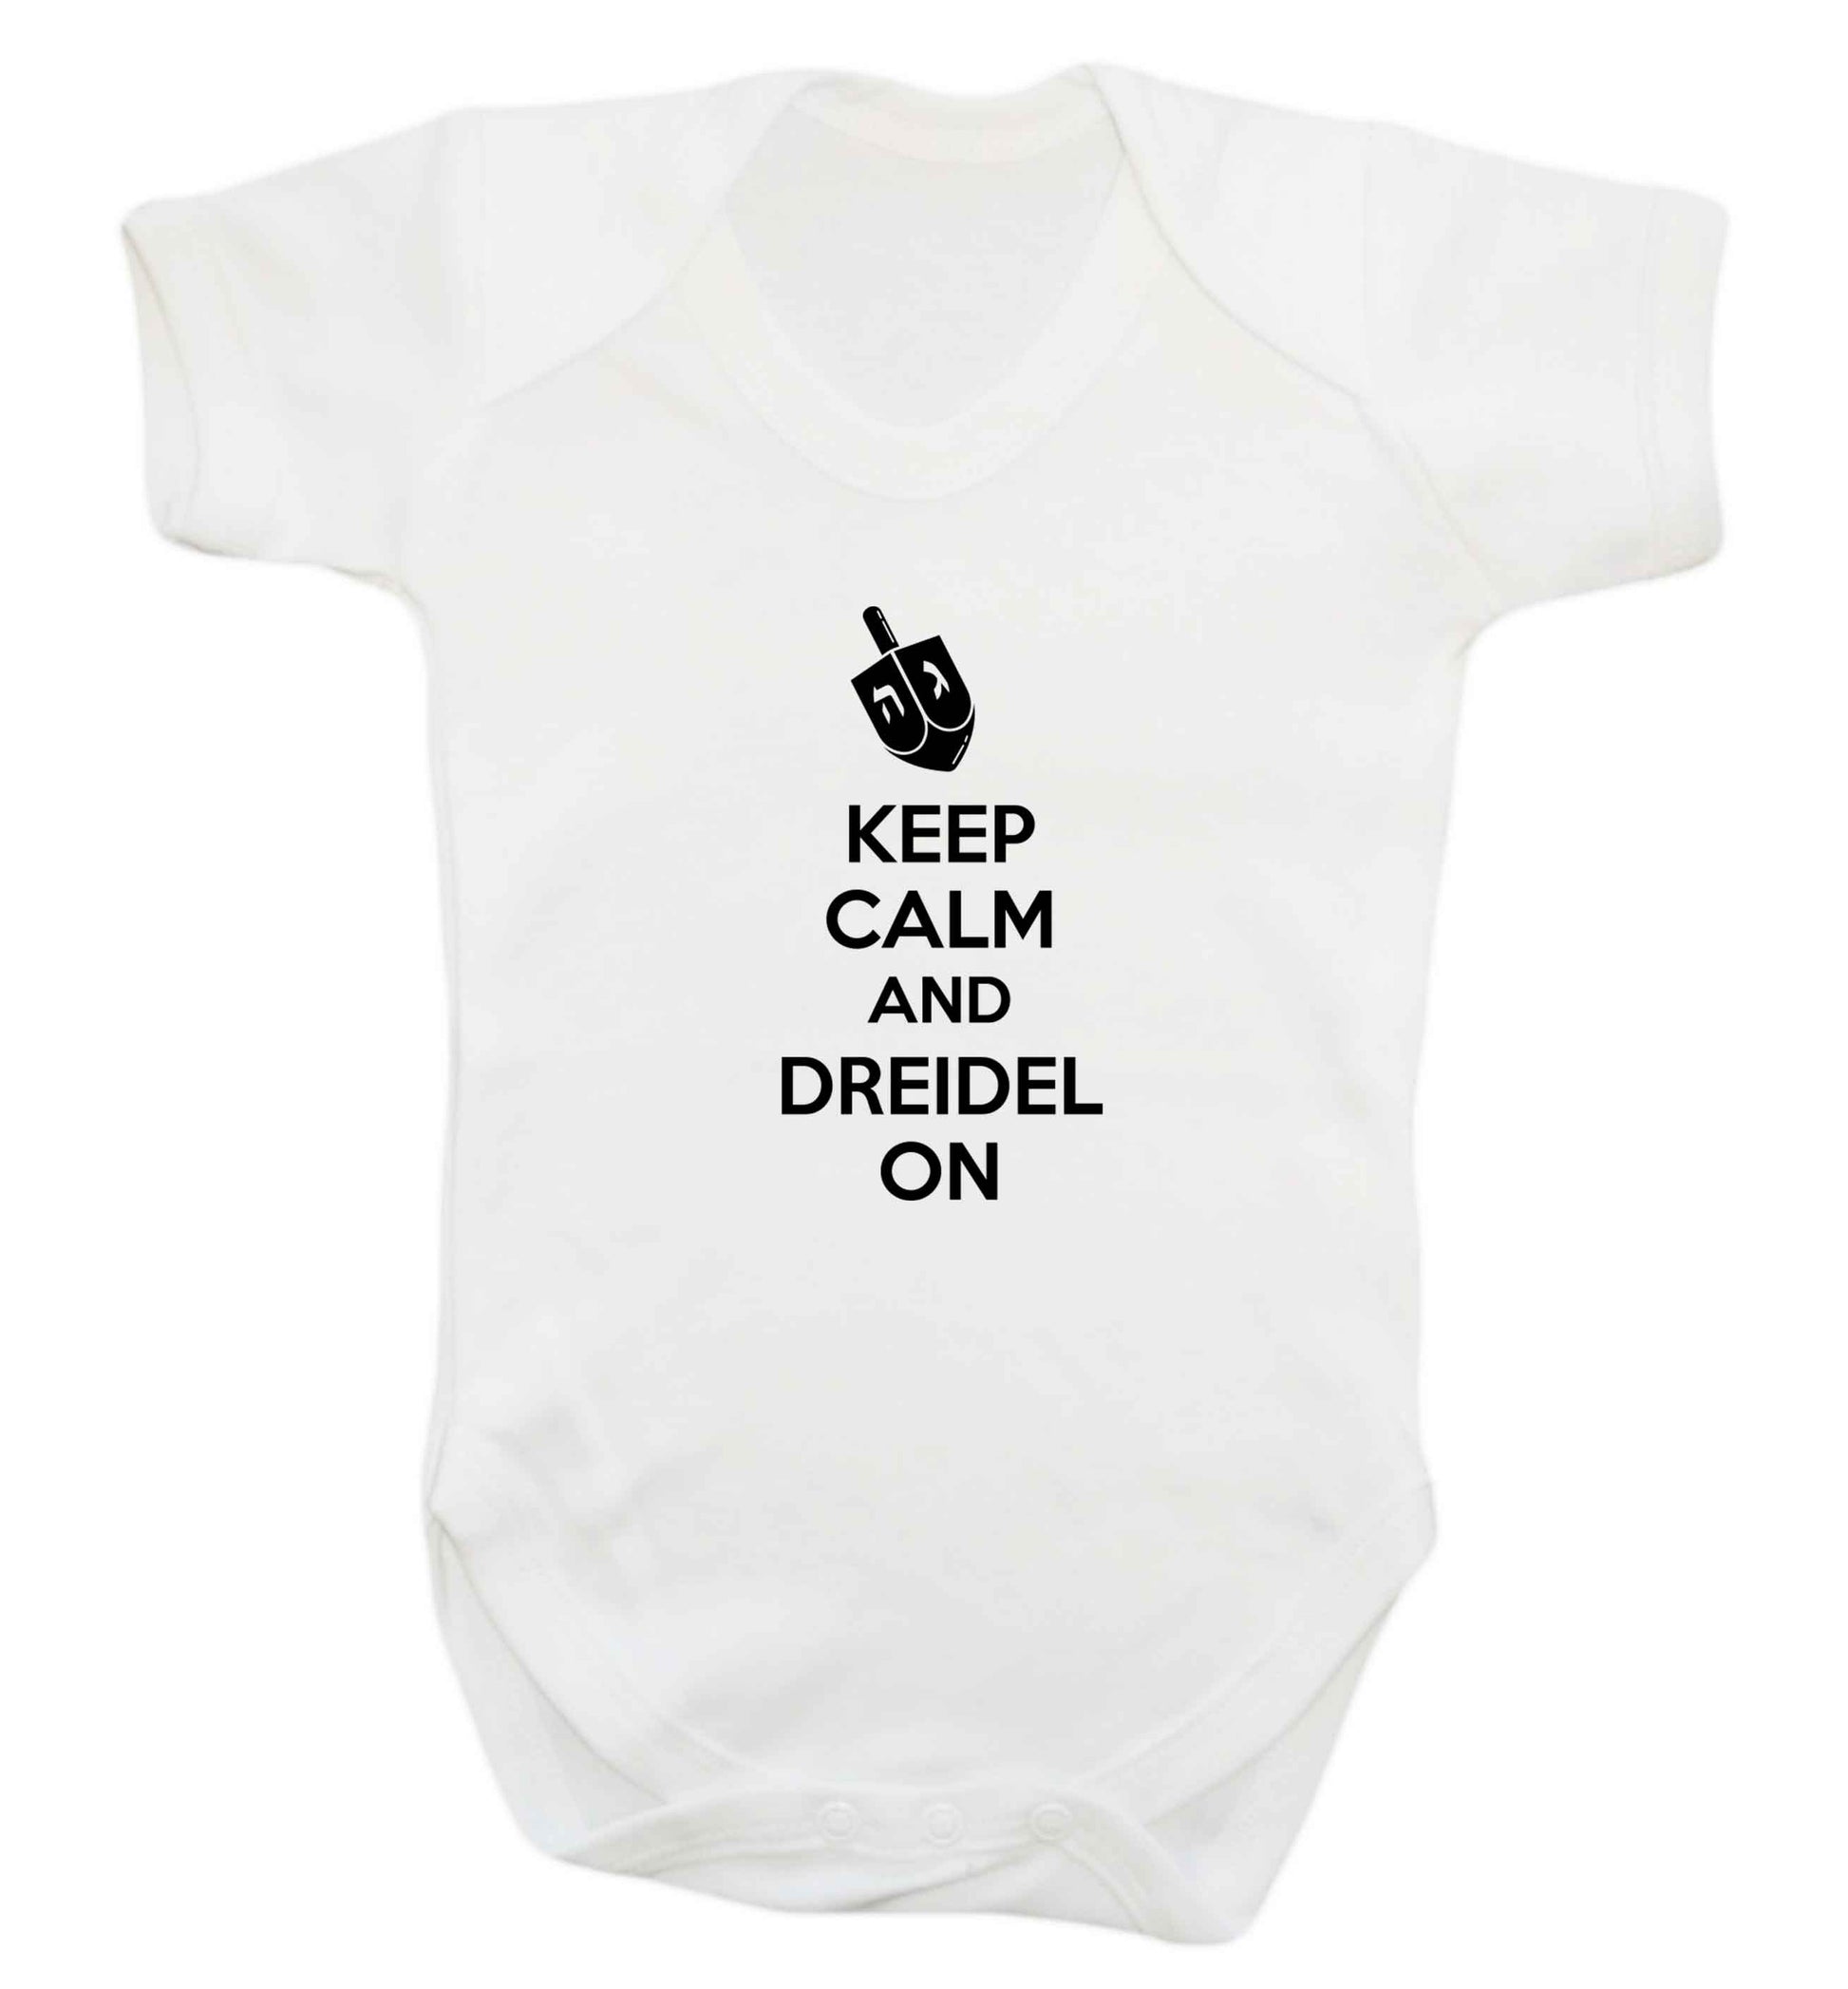 Keep calm and dreidel on baby vest white 18-24 months